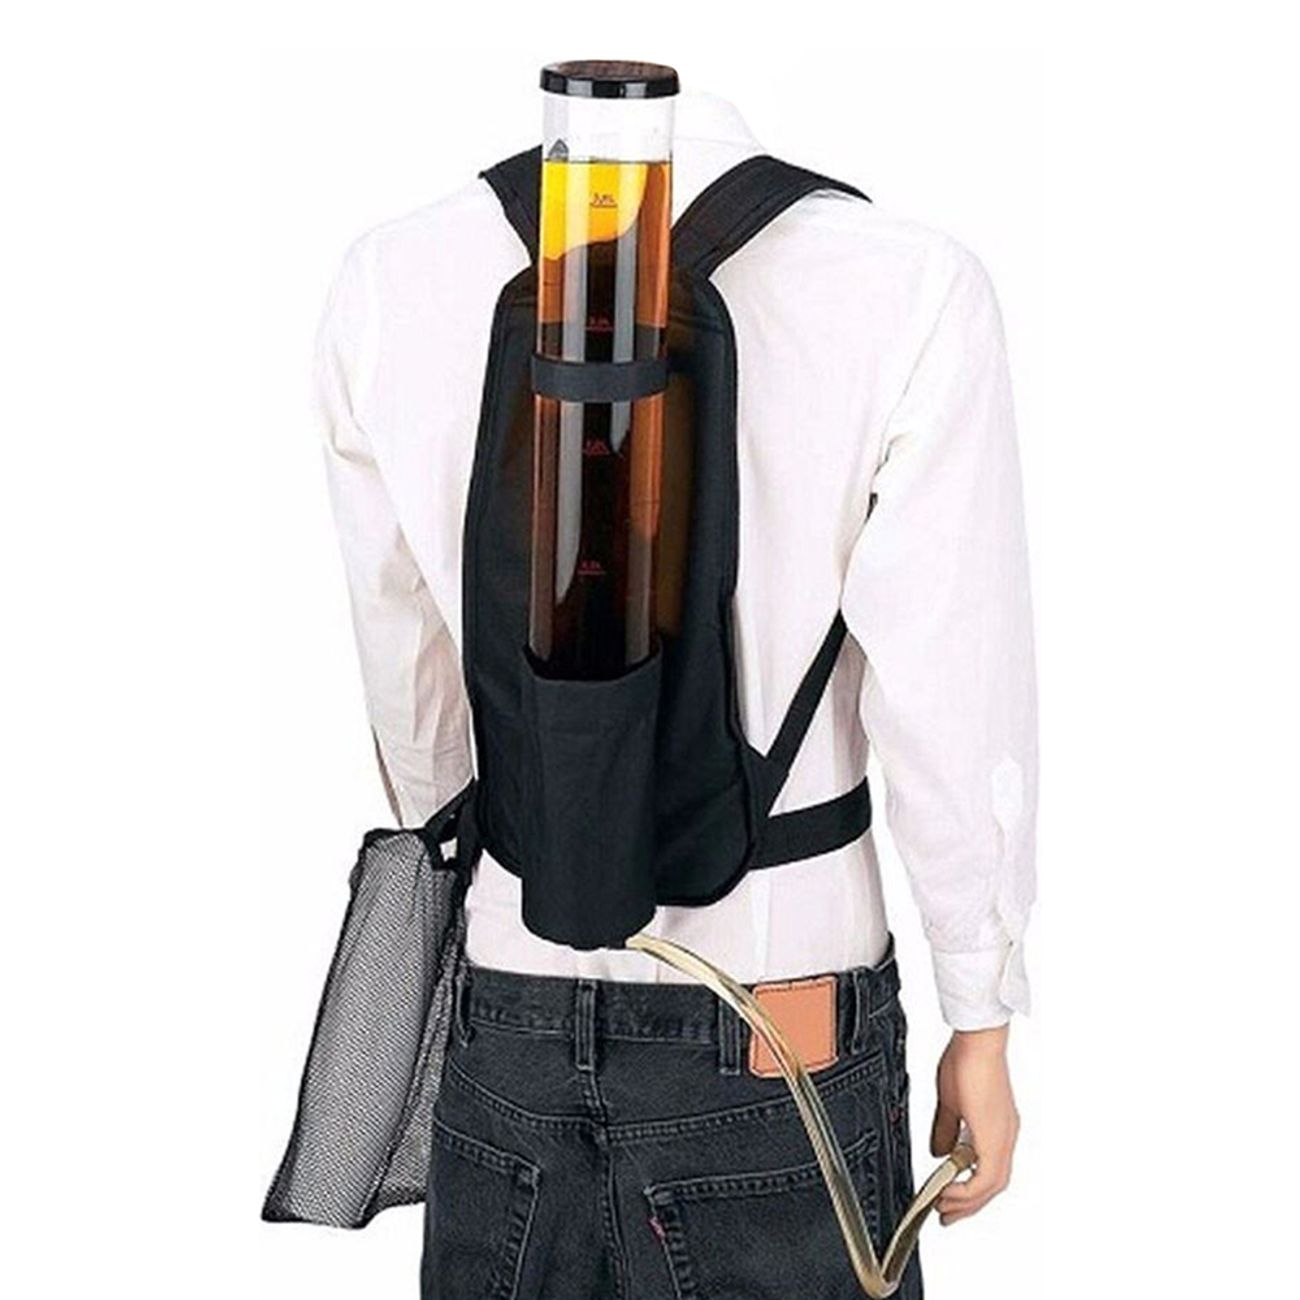 backpack-dubbel-dispenser-91134-1